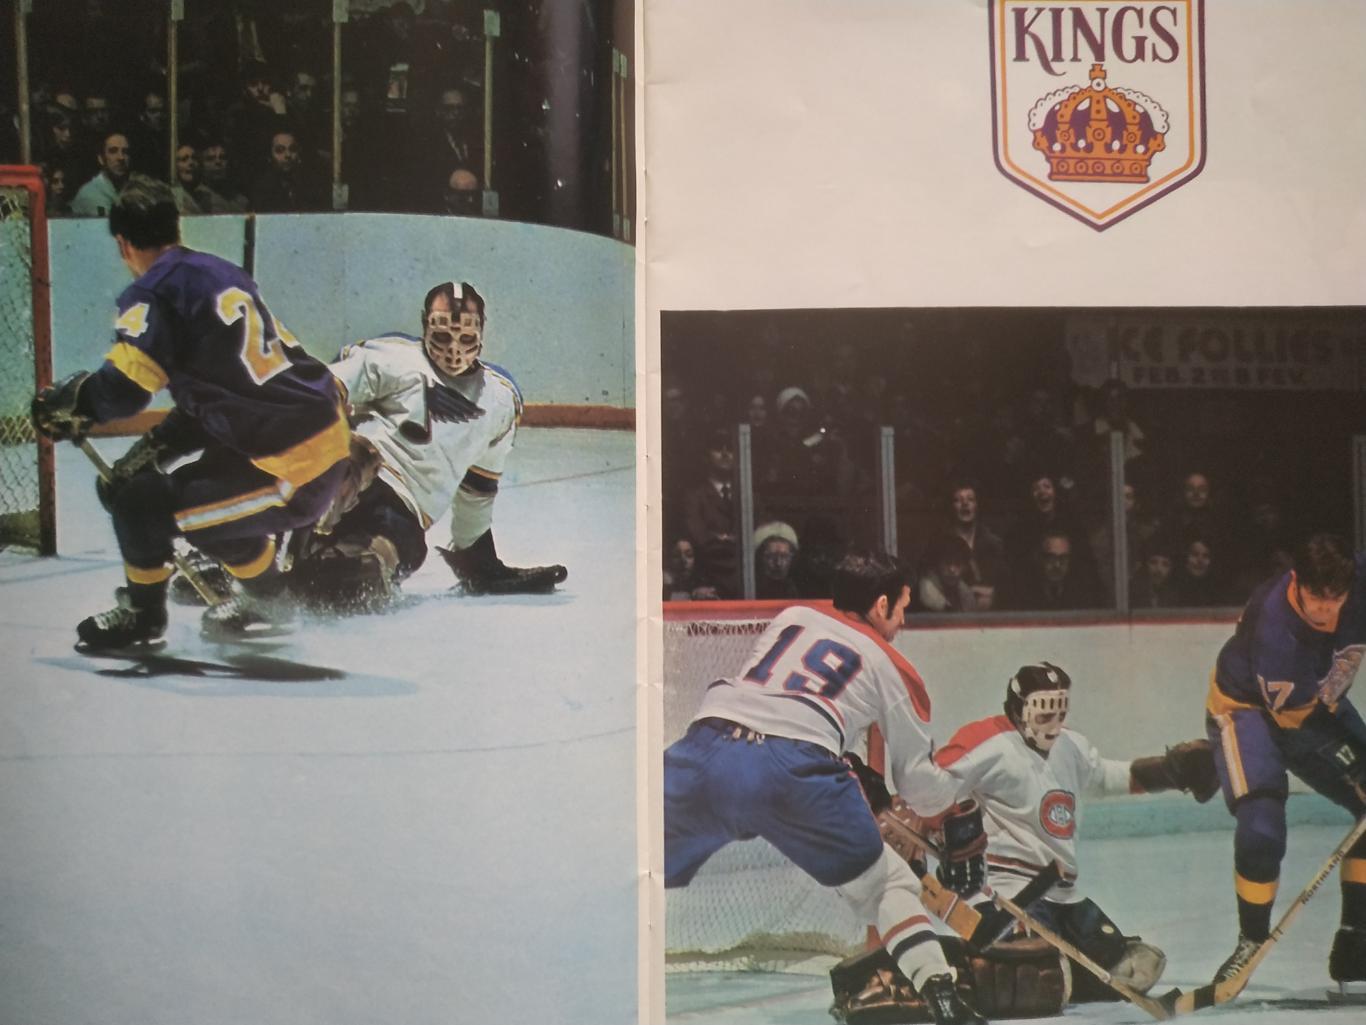 ХОККЕЙ ПРОГРАММА АЛЬБОМ ЛОС АНДЖЕЛЕС НХЛ NHL 1971 DEC.01 LOS ANGELES PROGRAM 2